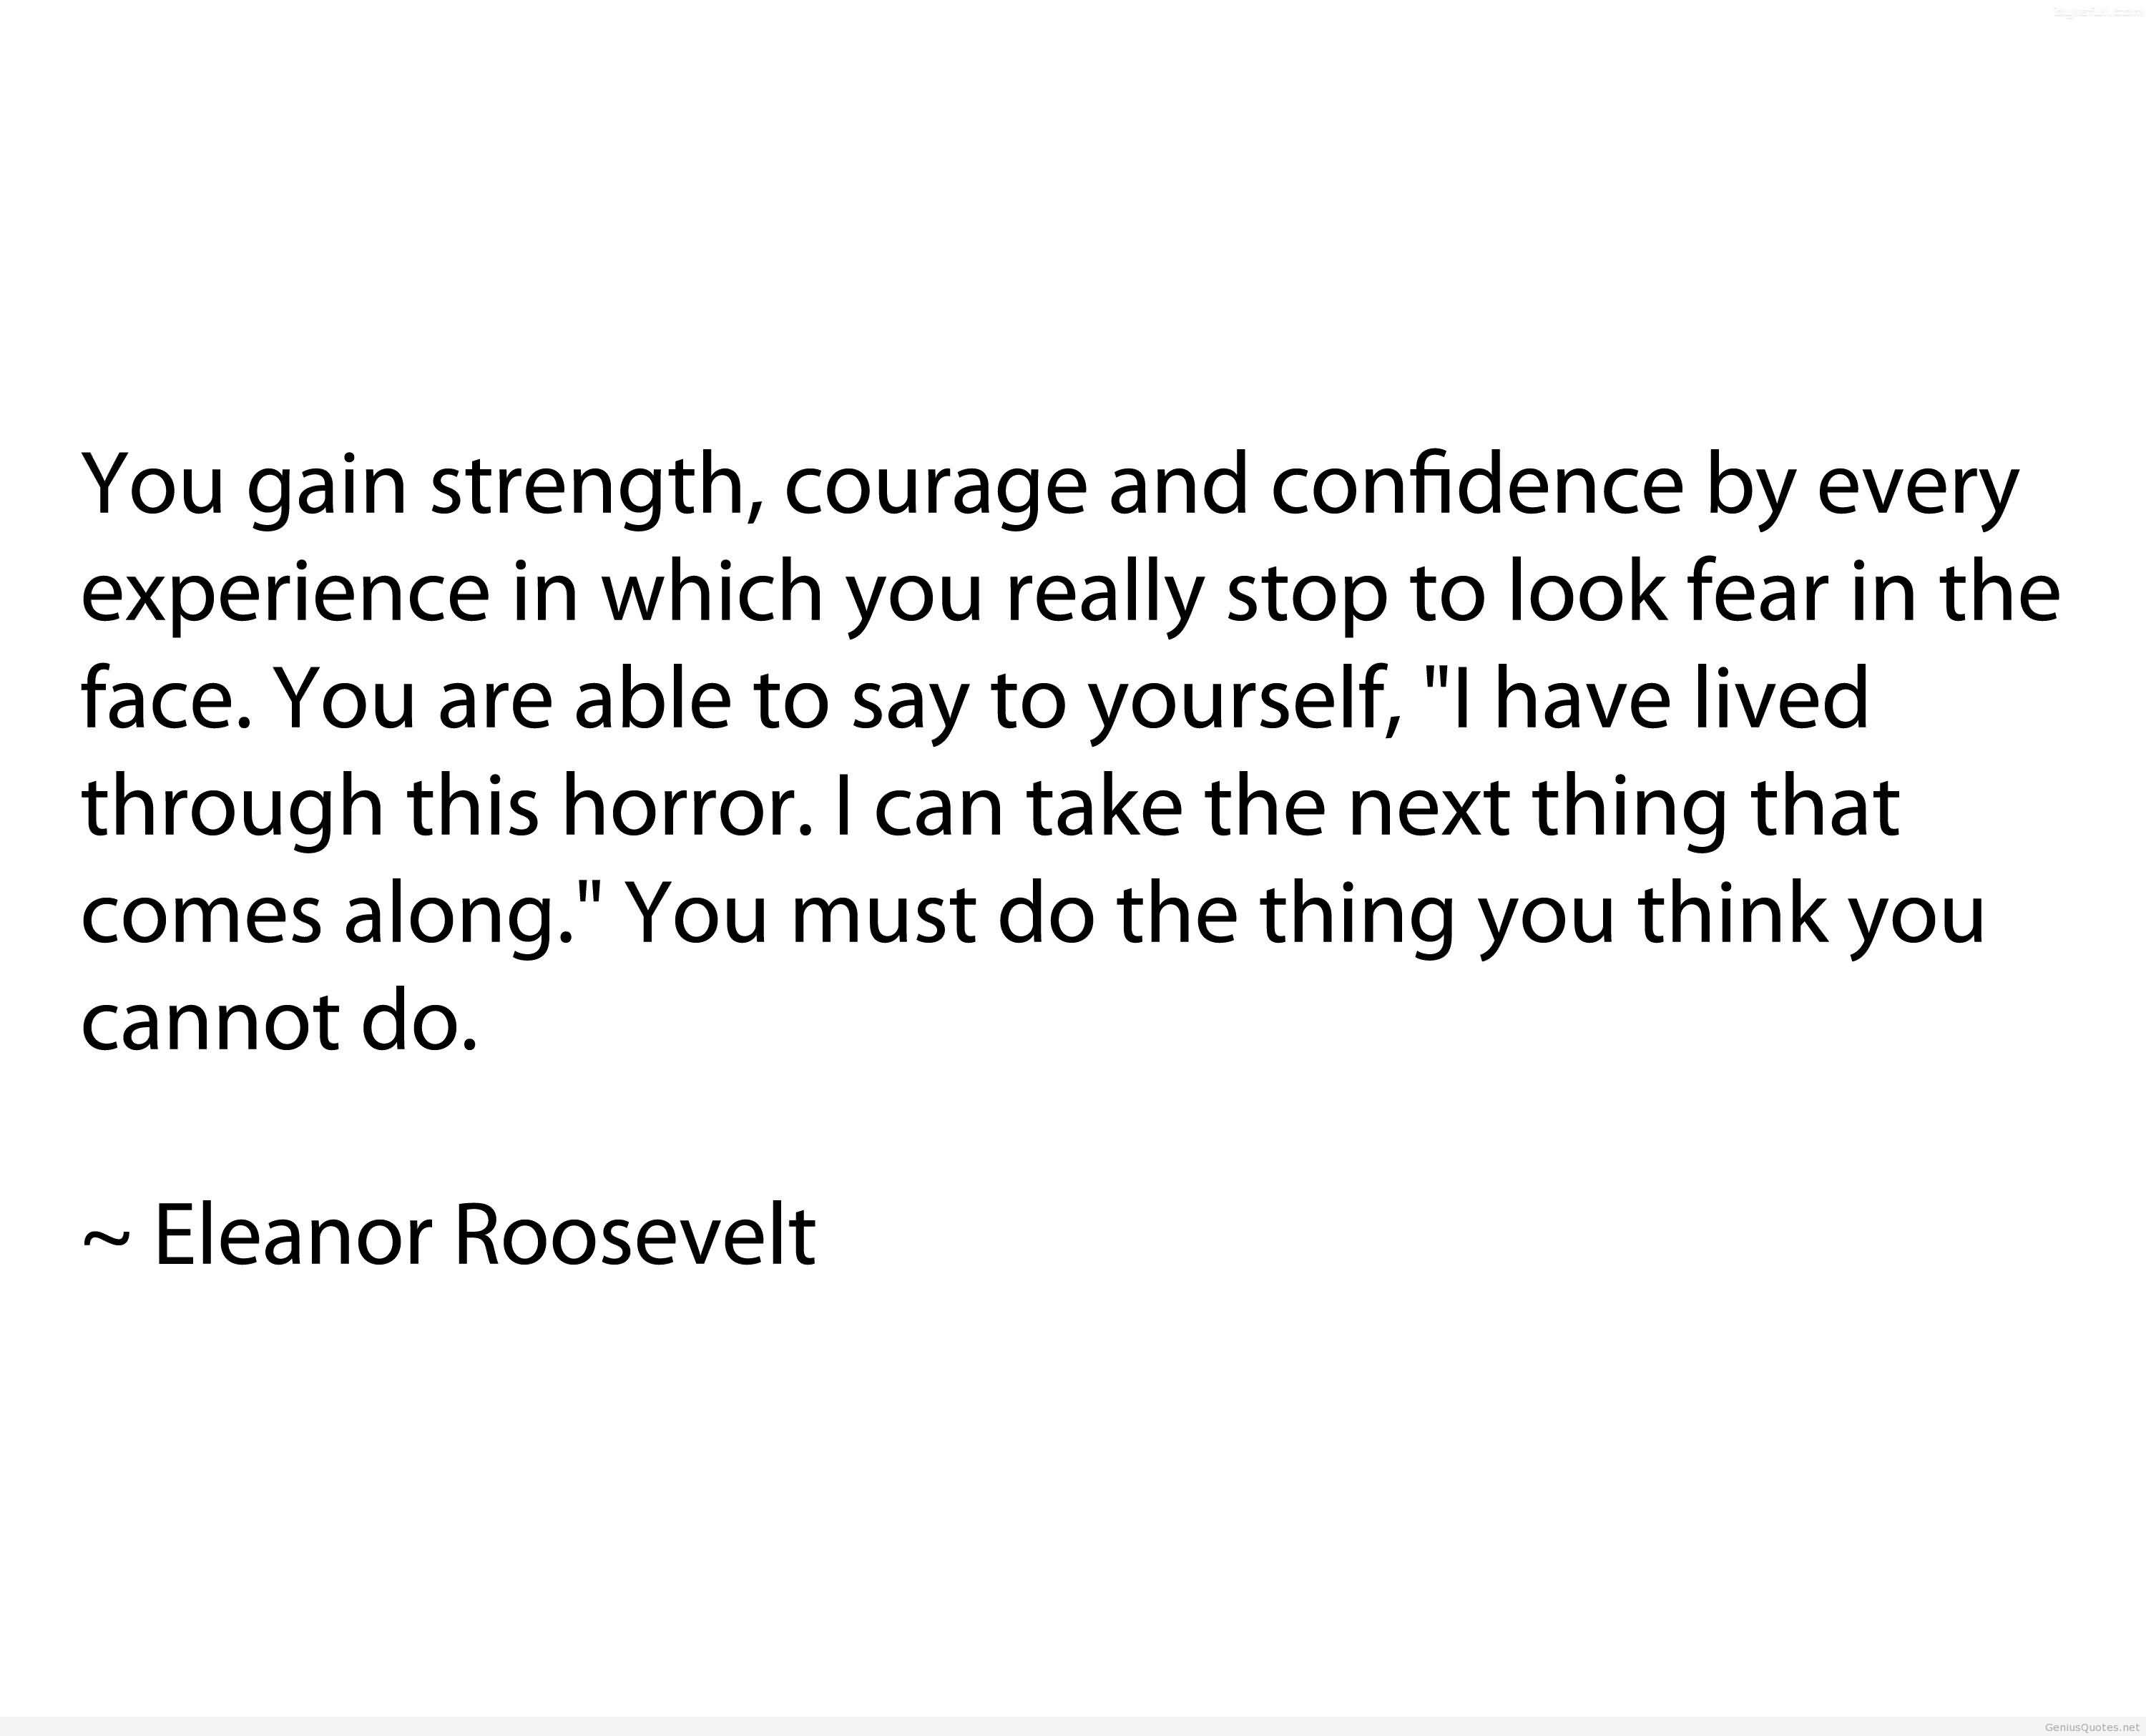 Eleanor Roosevelt Quote Meme Image 05